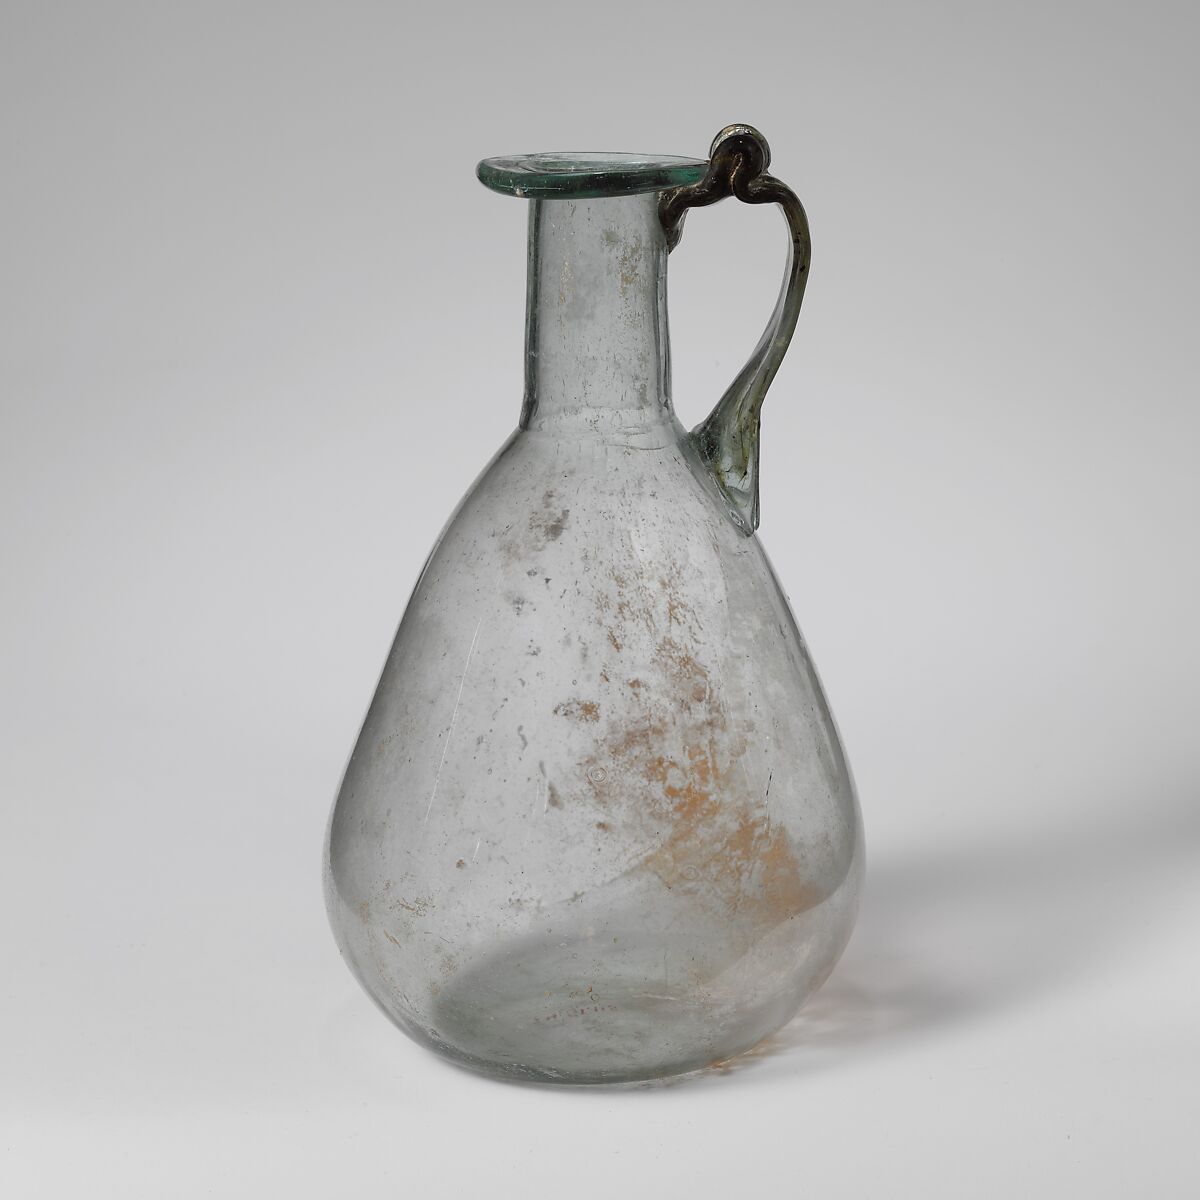 Glass jug, Glass, Roman, Cypriot 